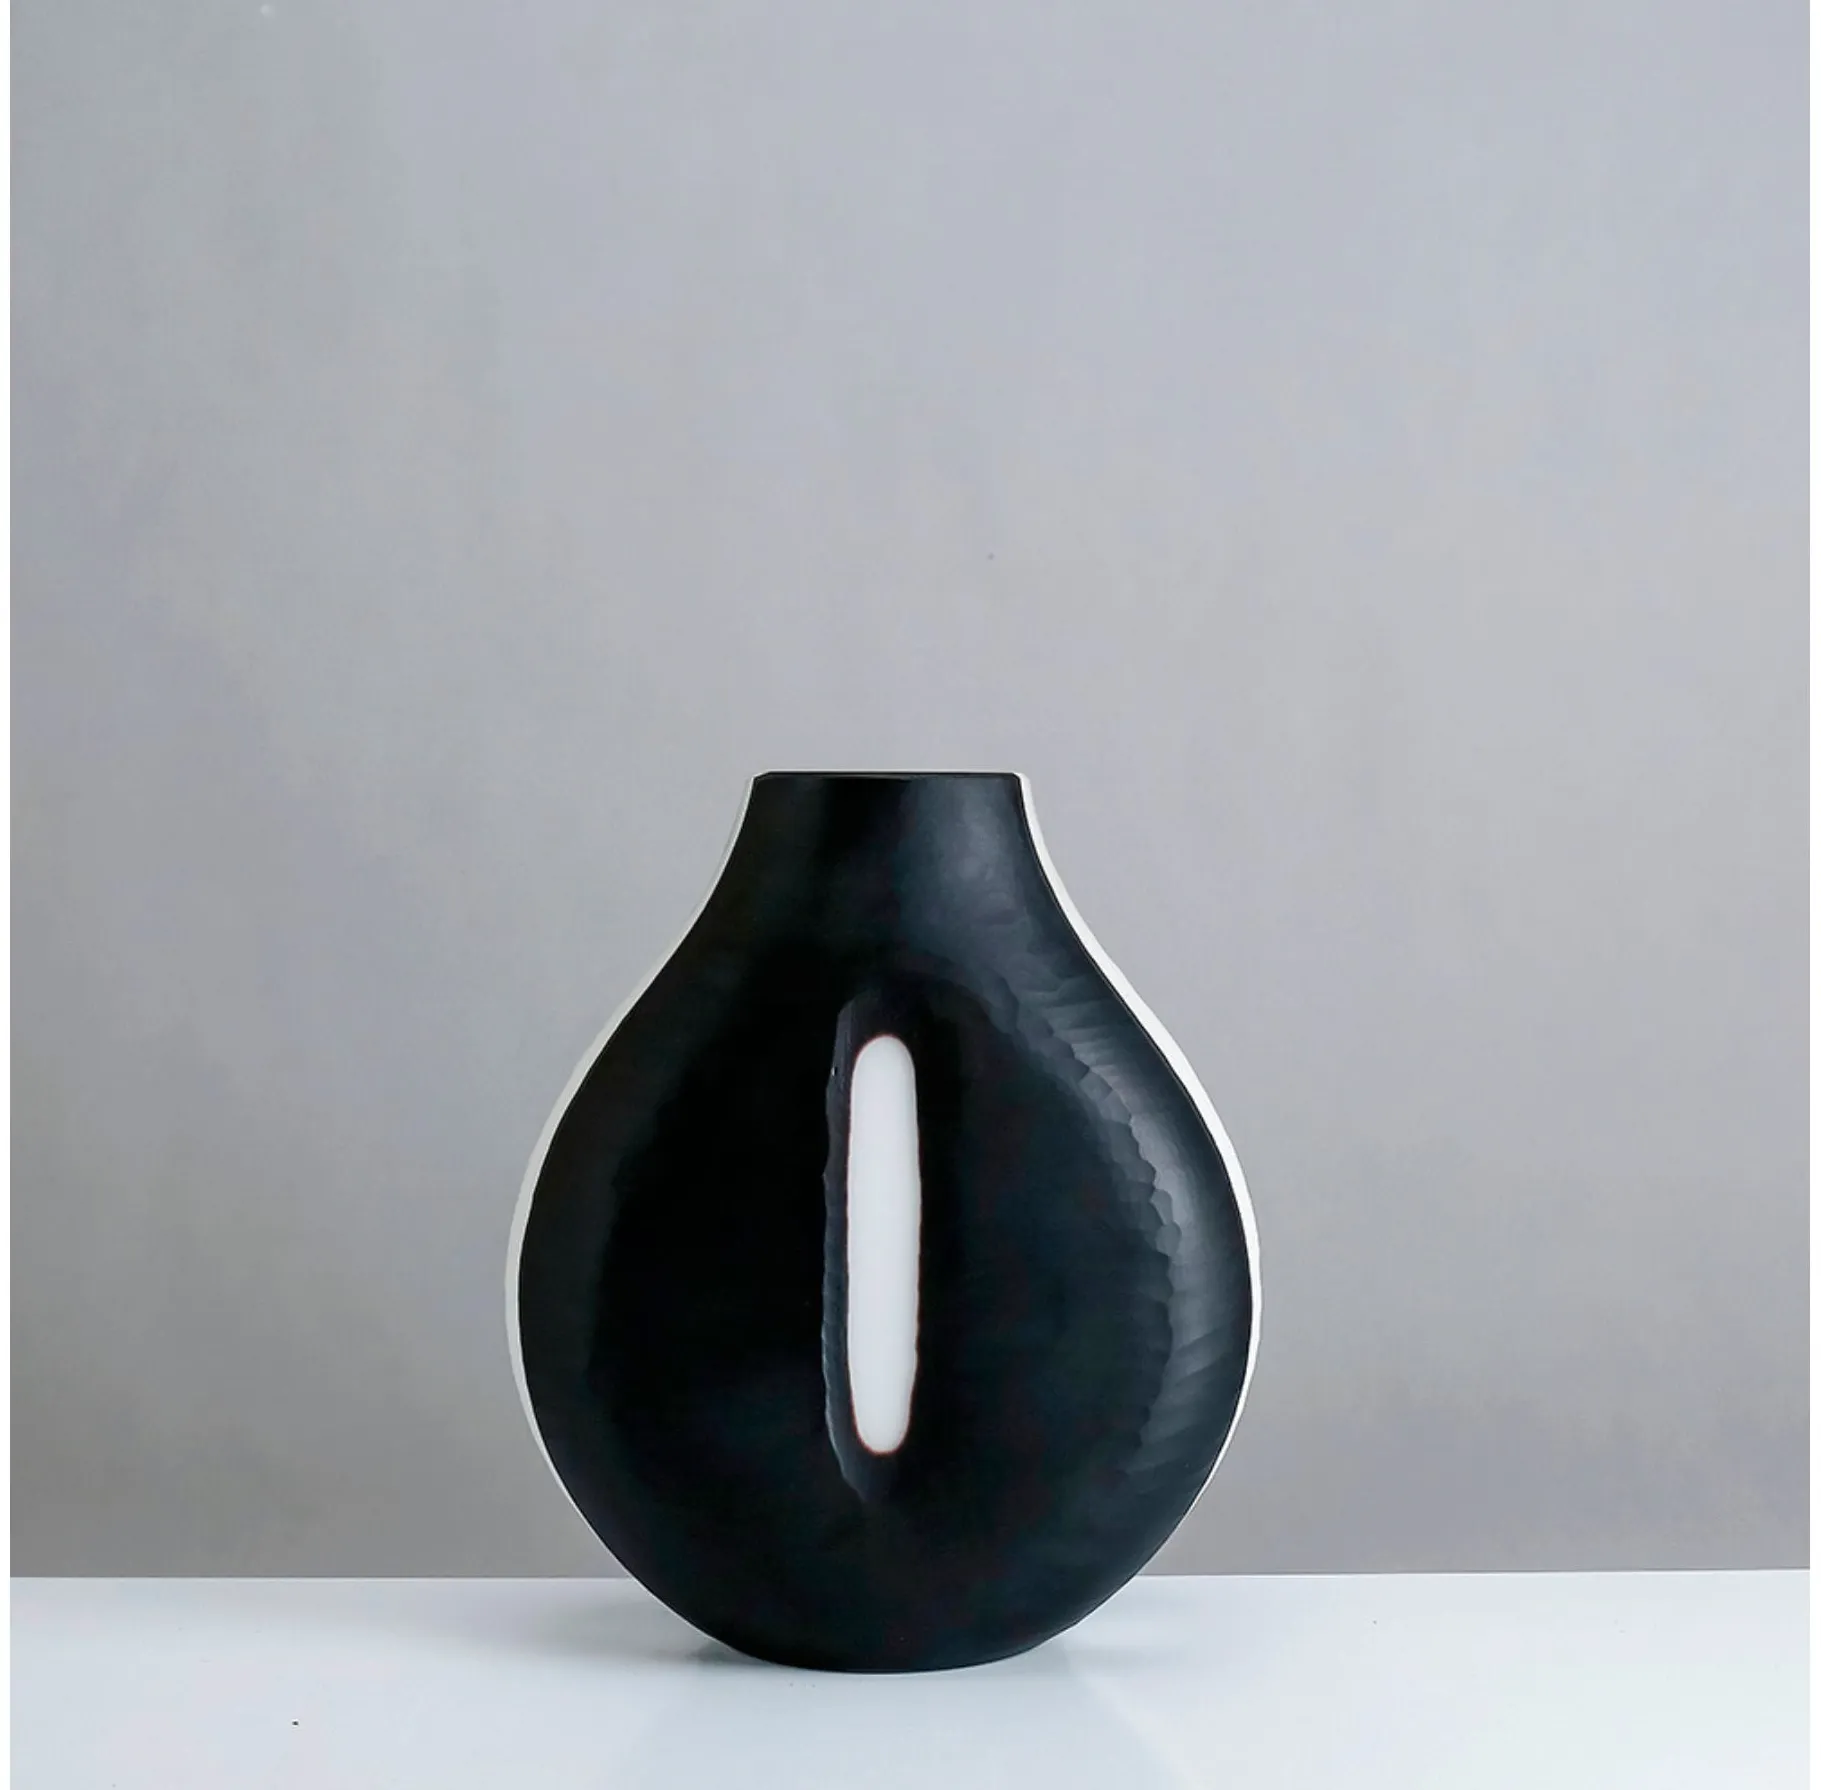 Short Black and White Glass Vase 9"W x 10"H